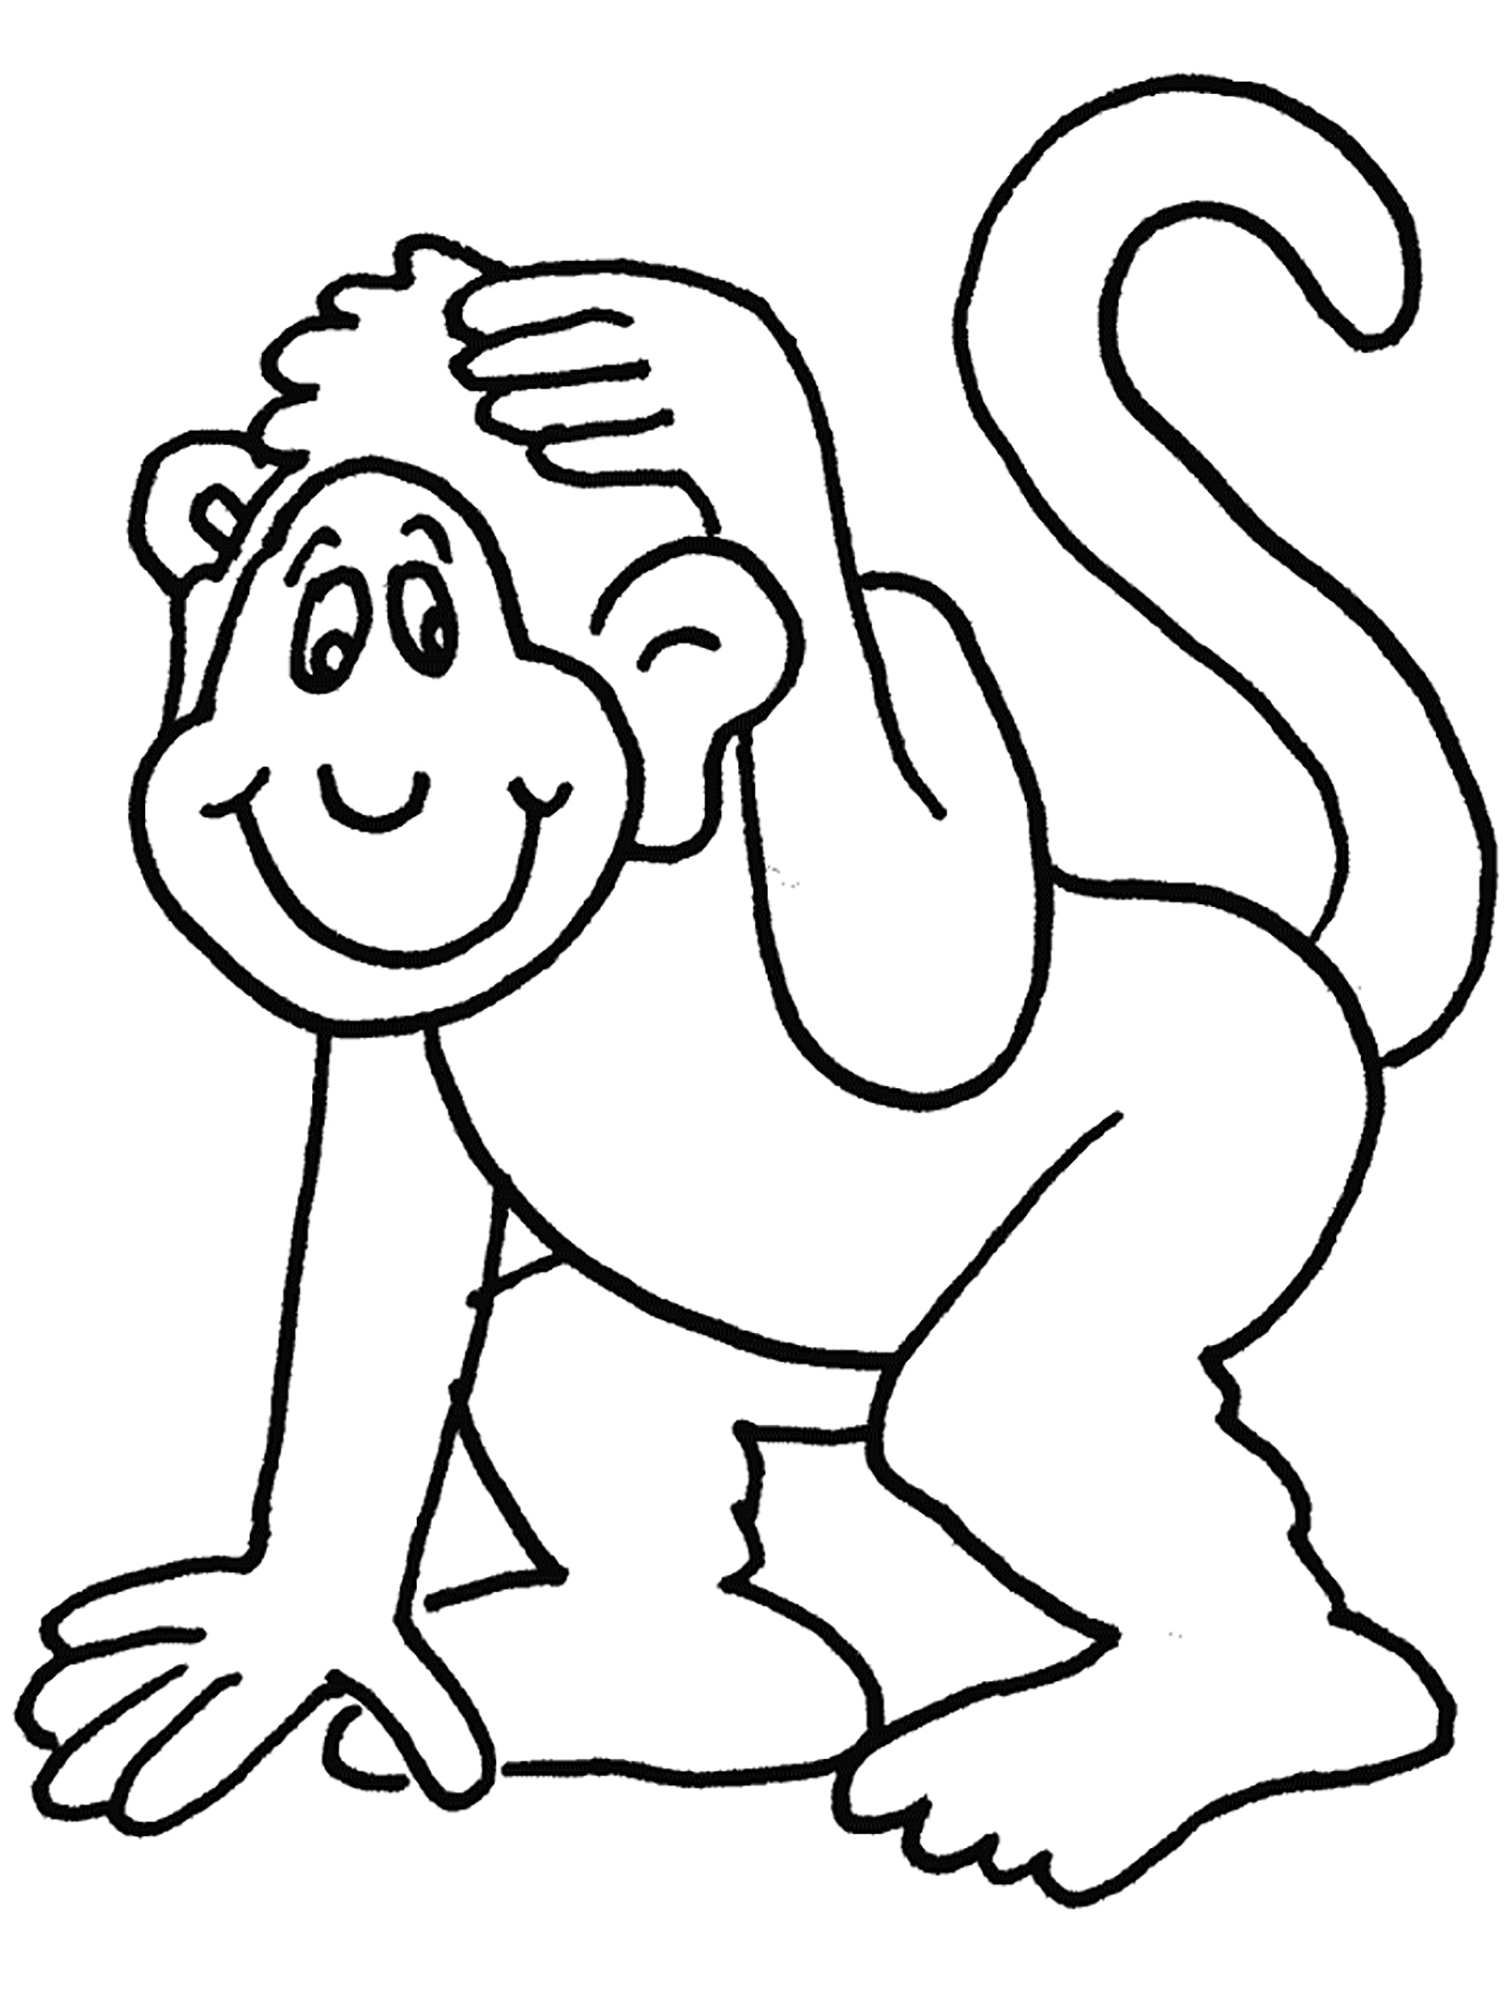 Imagem de macaco para descarregar e colorir - Macacos - Just Color